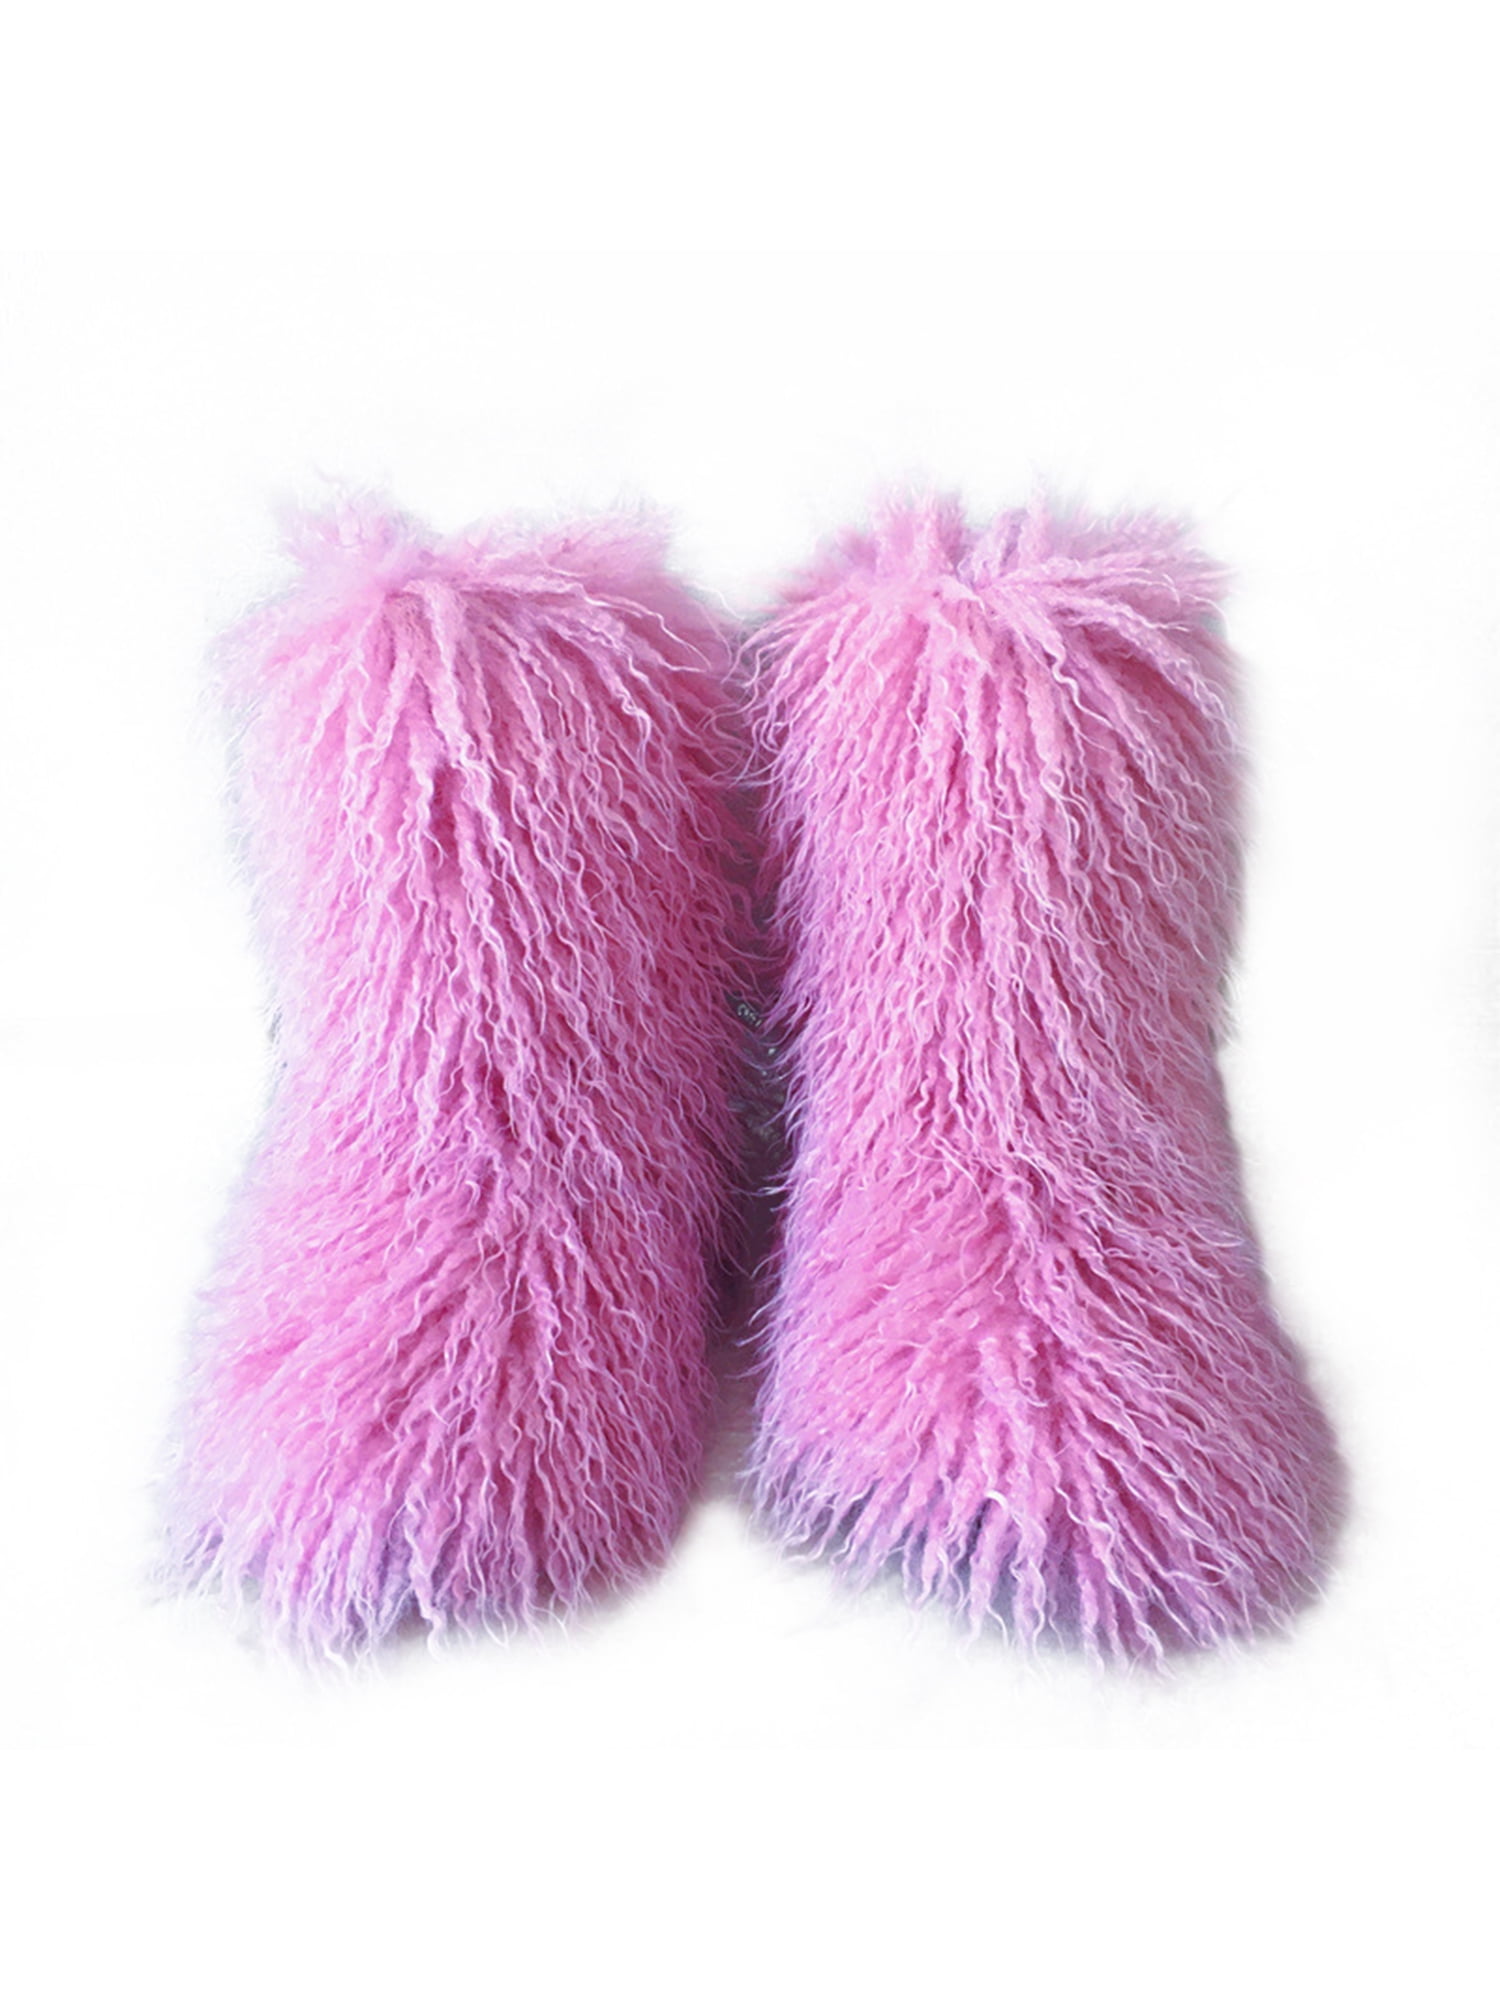 Ritualay Ladies Comfortable Mid Calf Boot Cozy Faux Fur Fuzzy Snow ...